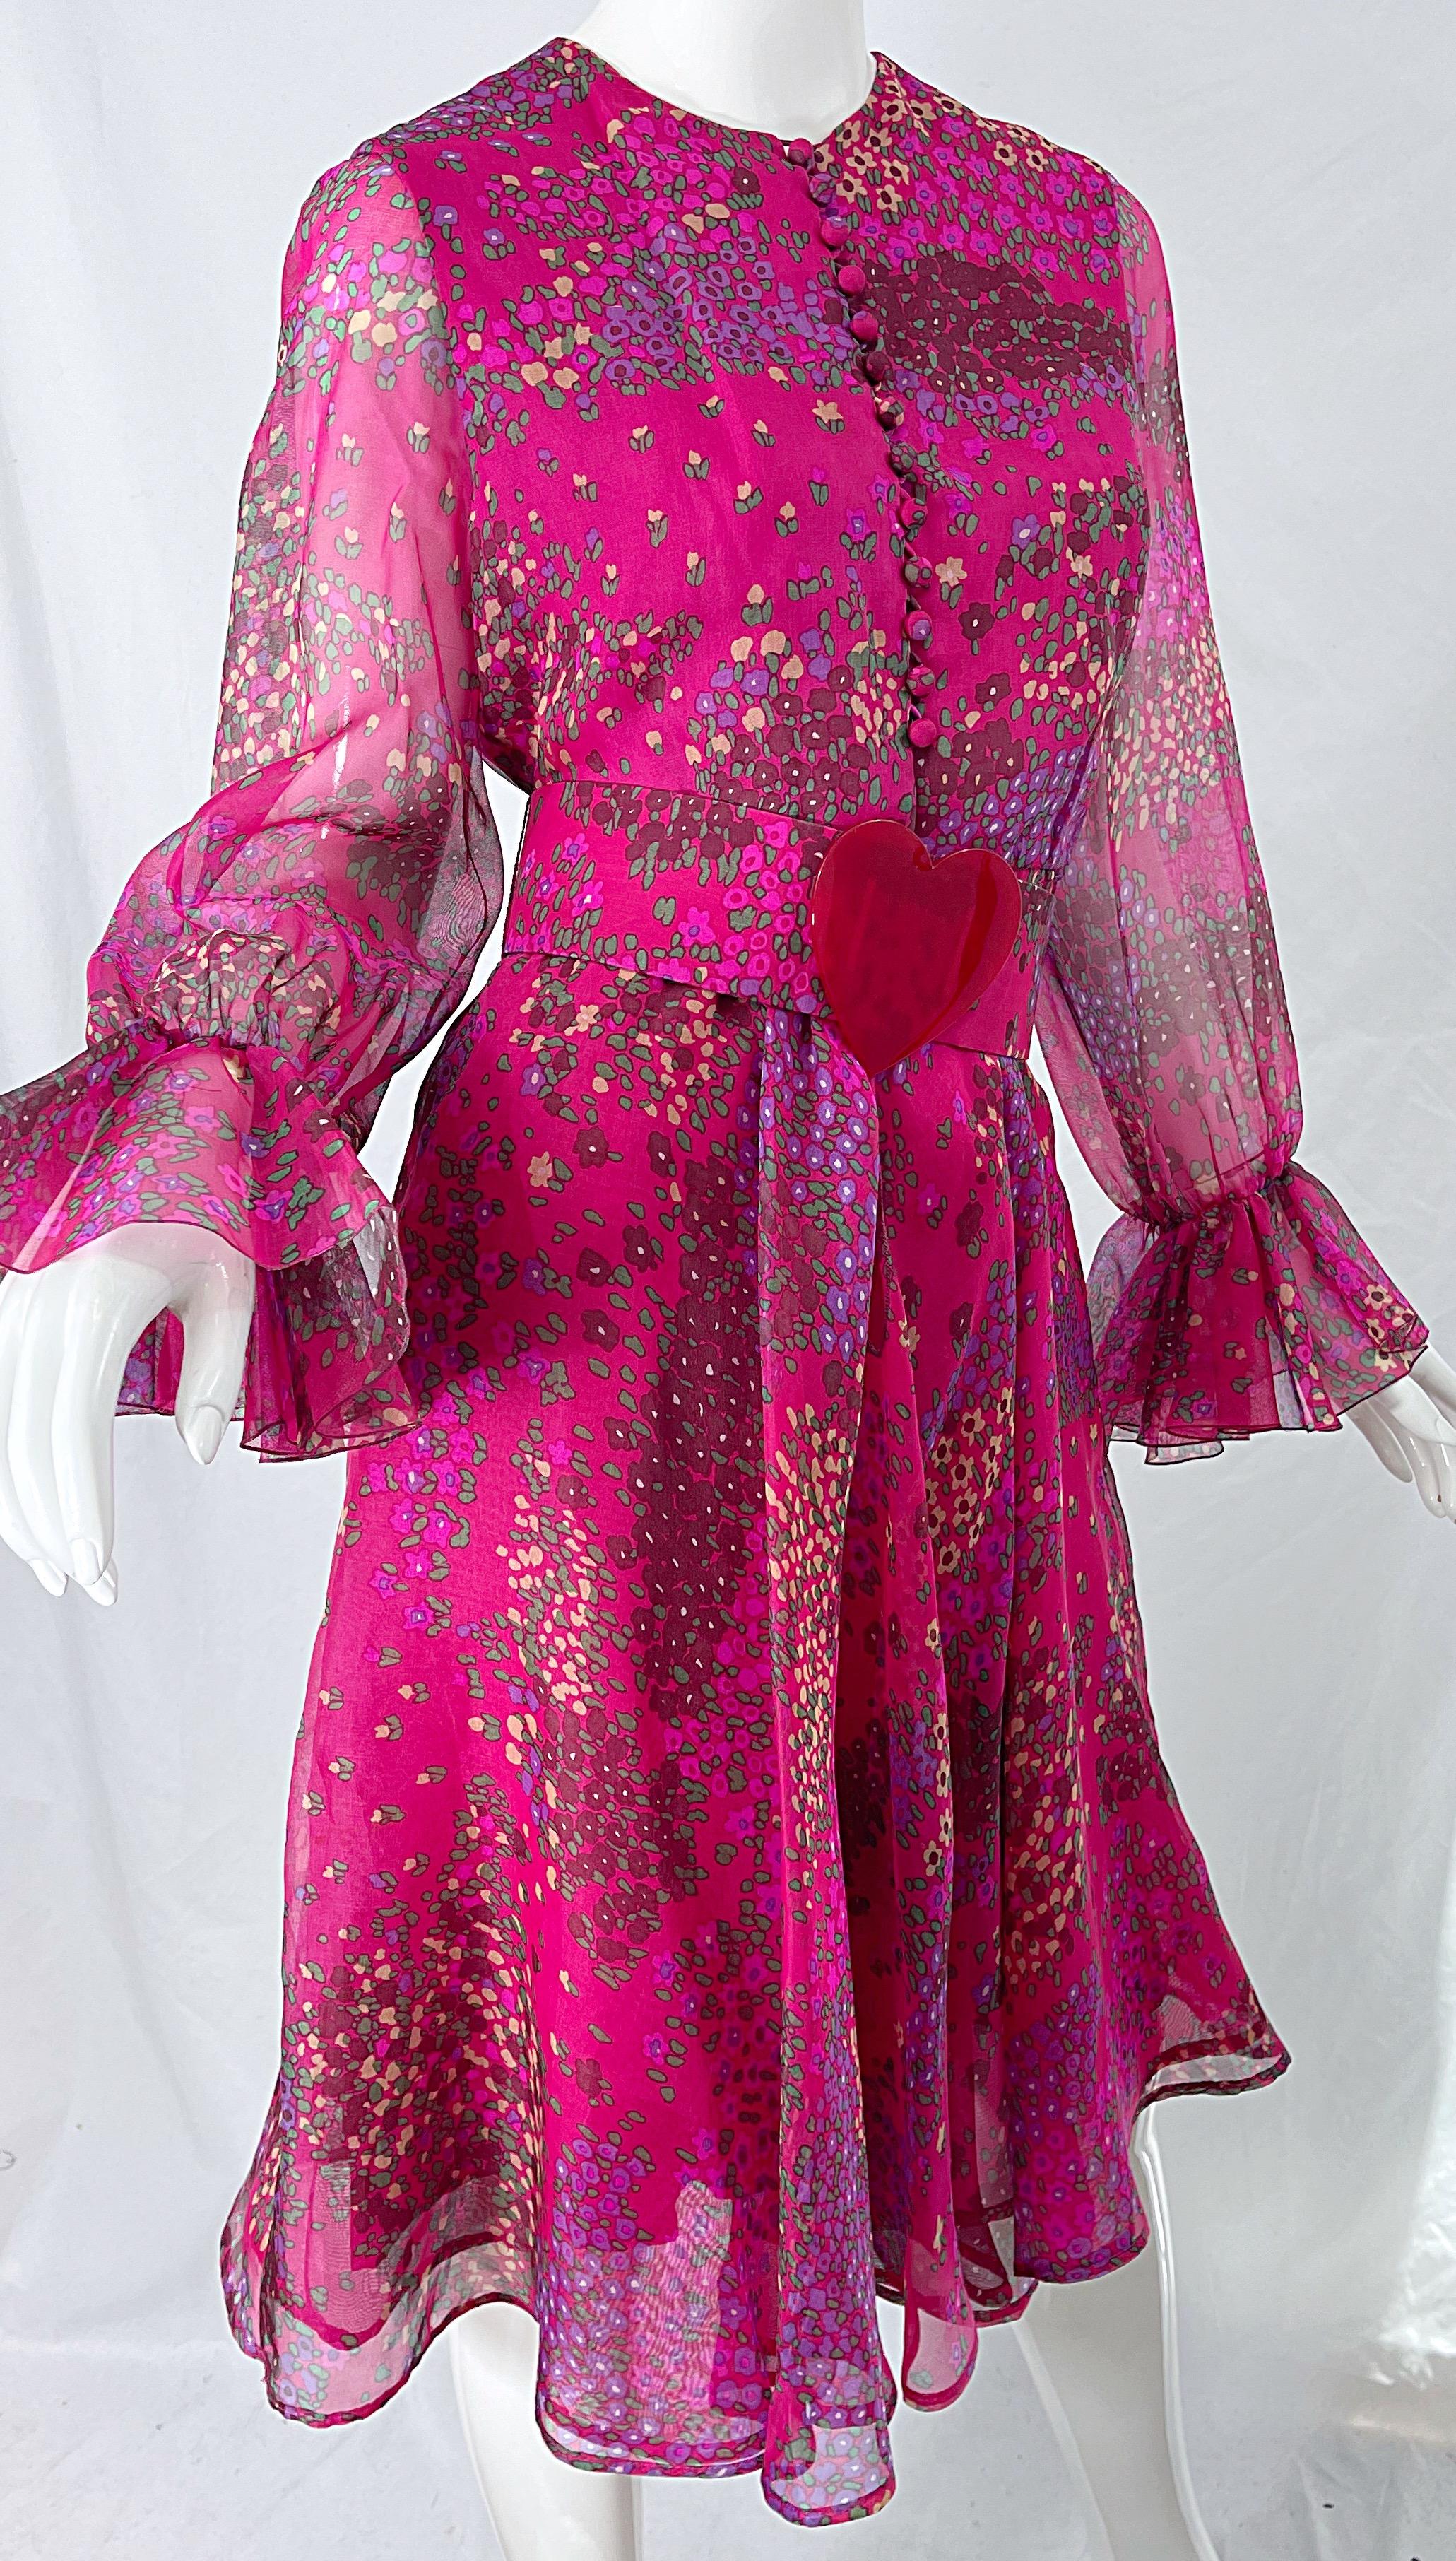 Women's 1960s Oscar de la Renta Pink Heart and Flower Print Vintage 60s Silk Dress For Sale